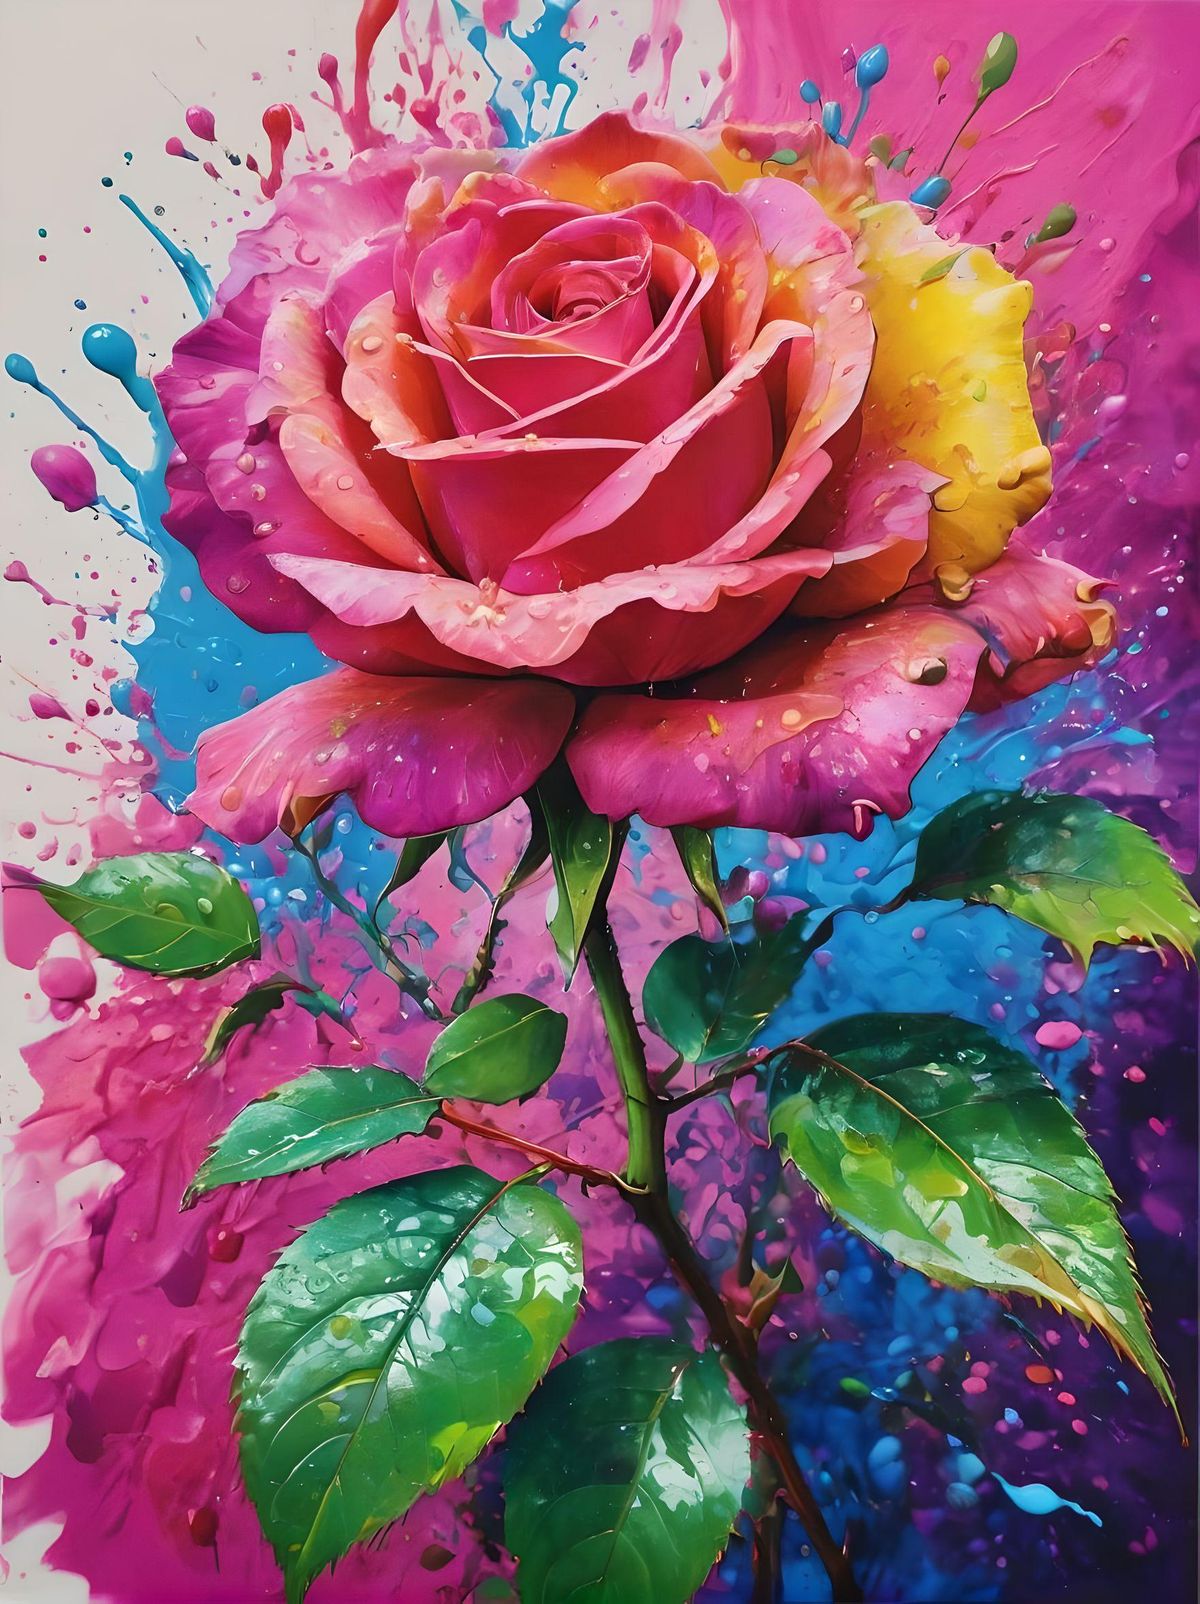 acrylic colors splash on rose bush, multiple bright colors